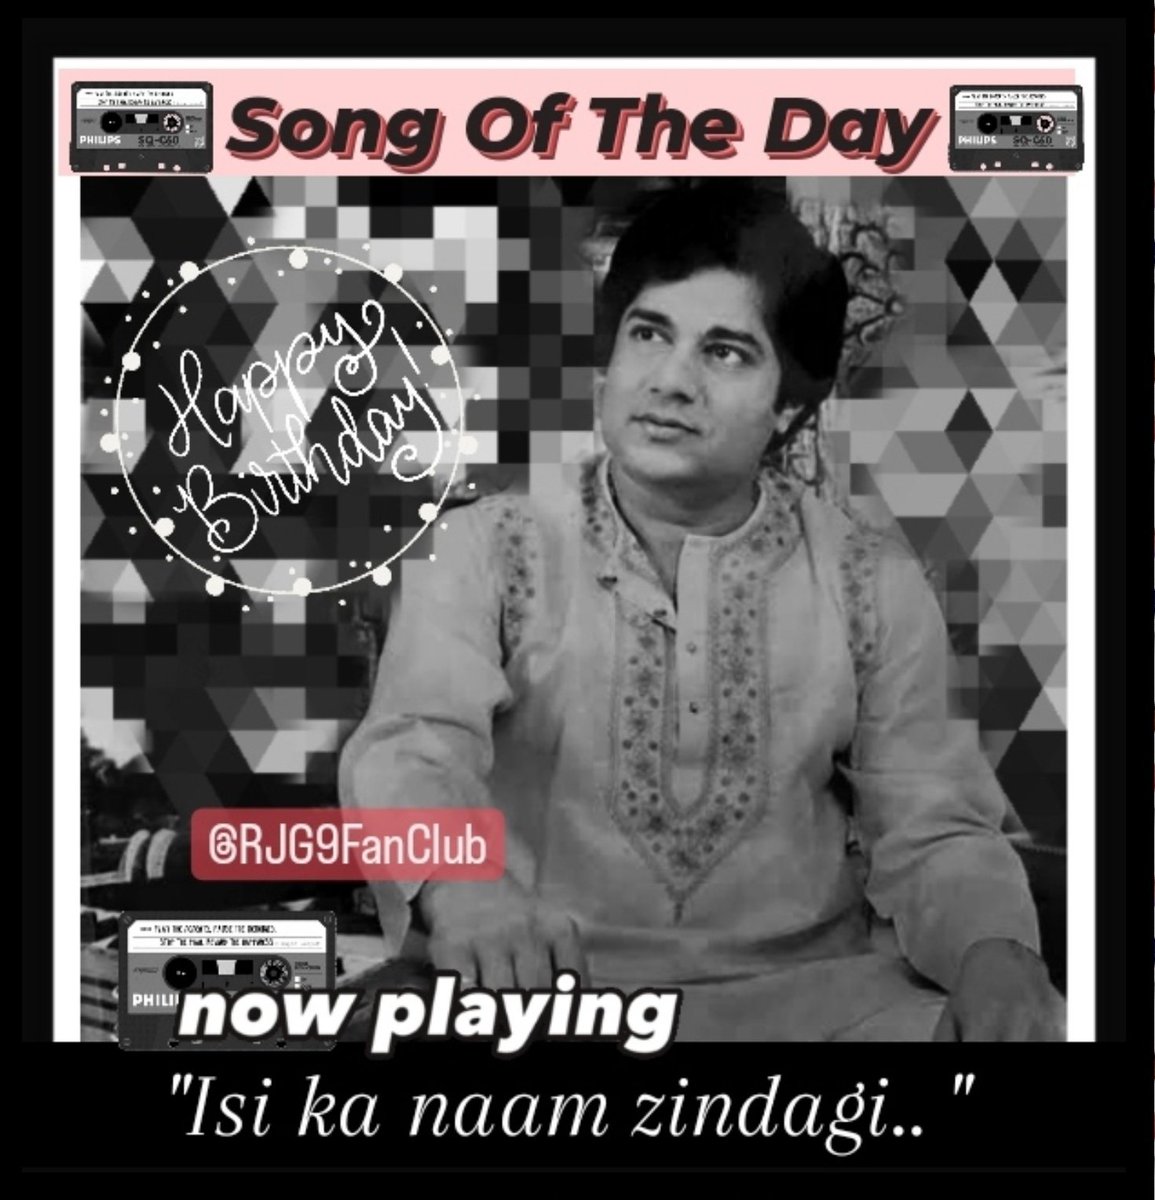 #SongOfTheDay🎤

'Muthi bandhe aye sabhi khali hath jayenge
Apne paraye koi sath nhi ayenge
Isi ka naam zindagi..'

#AnupJalota🎤+🎬#Indeevar✒️
#BappiLahiri🎼
(🎬#Pran 🎬#AamirKhan) 

B'day wishes to famous singer of #IndianMusicIndustry  @anupjalota Ji🎂
Regards @RJG9FanClub🙏